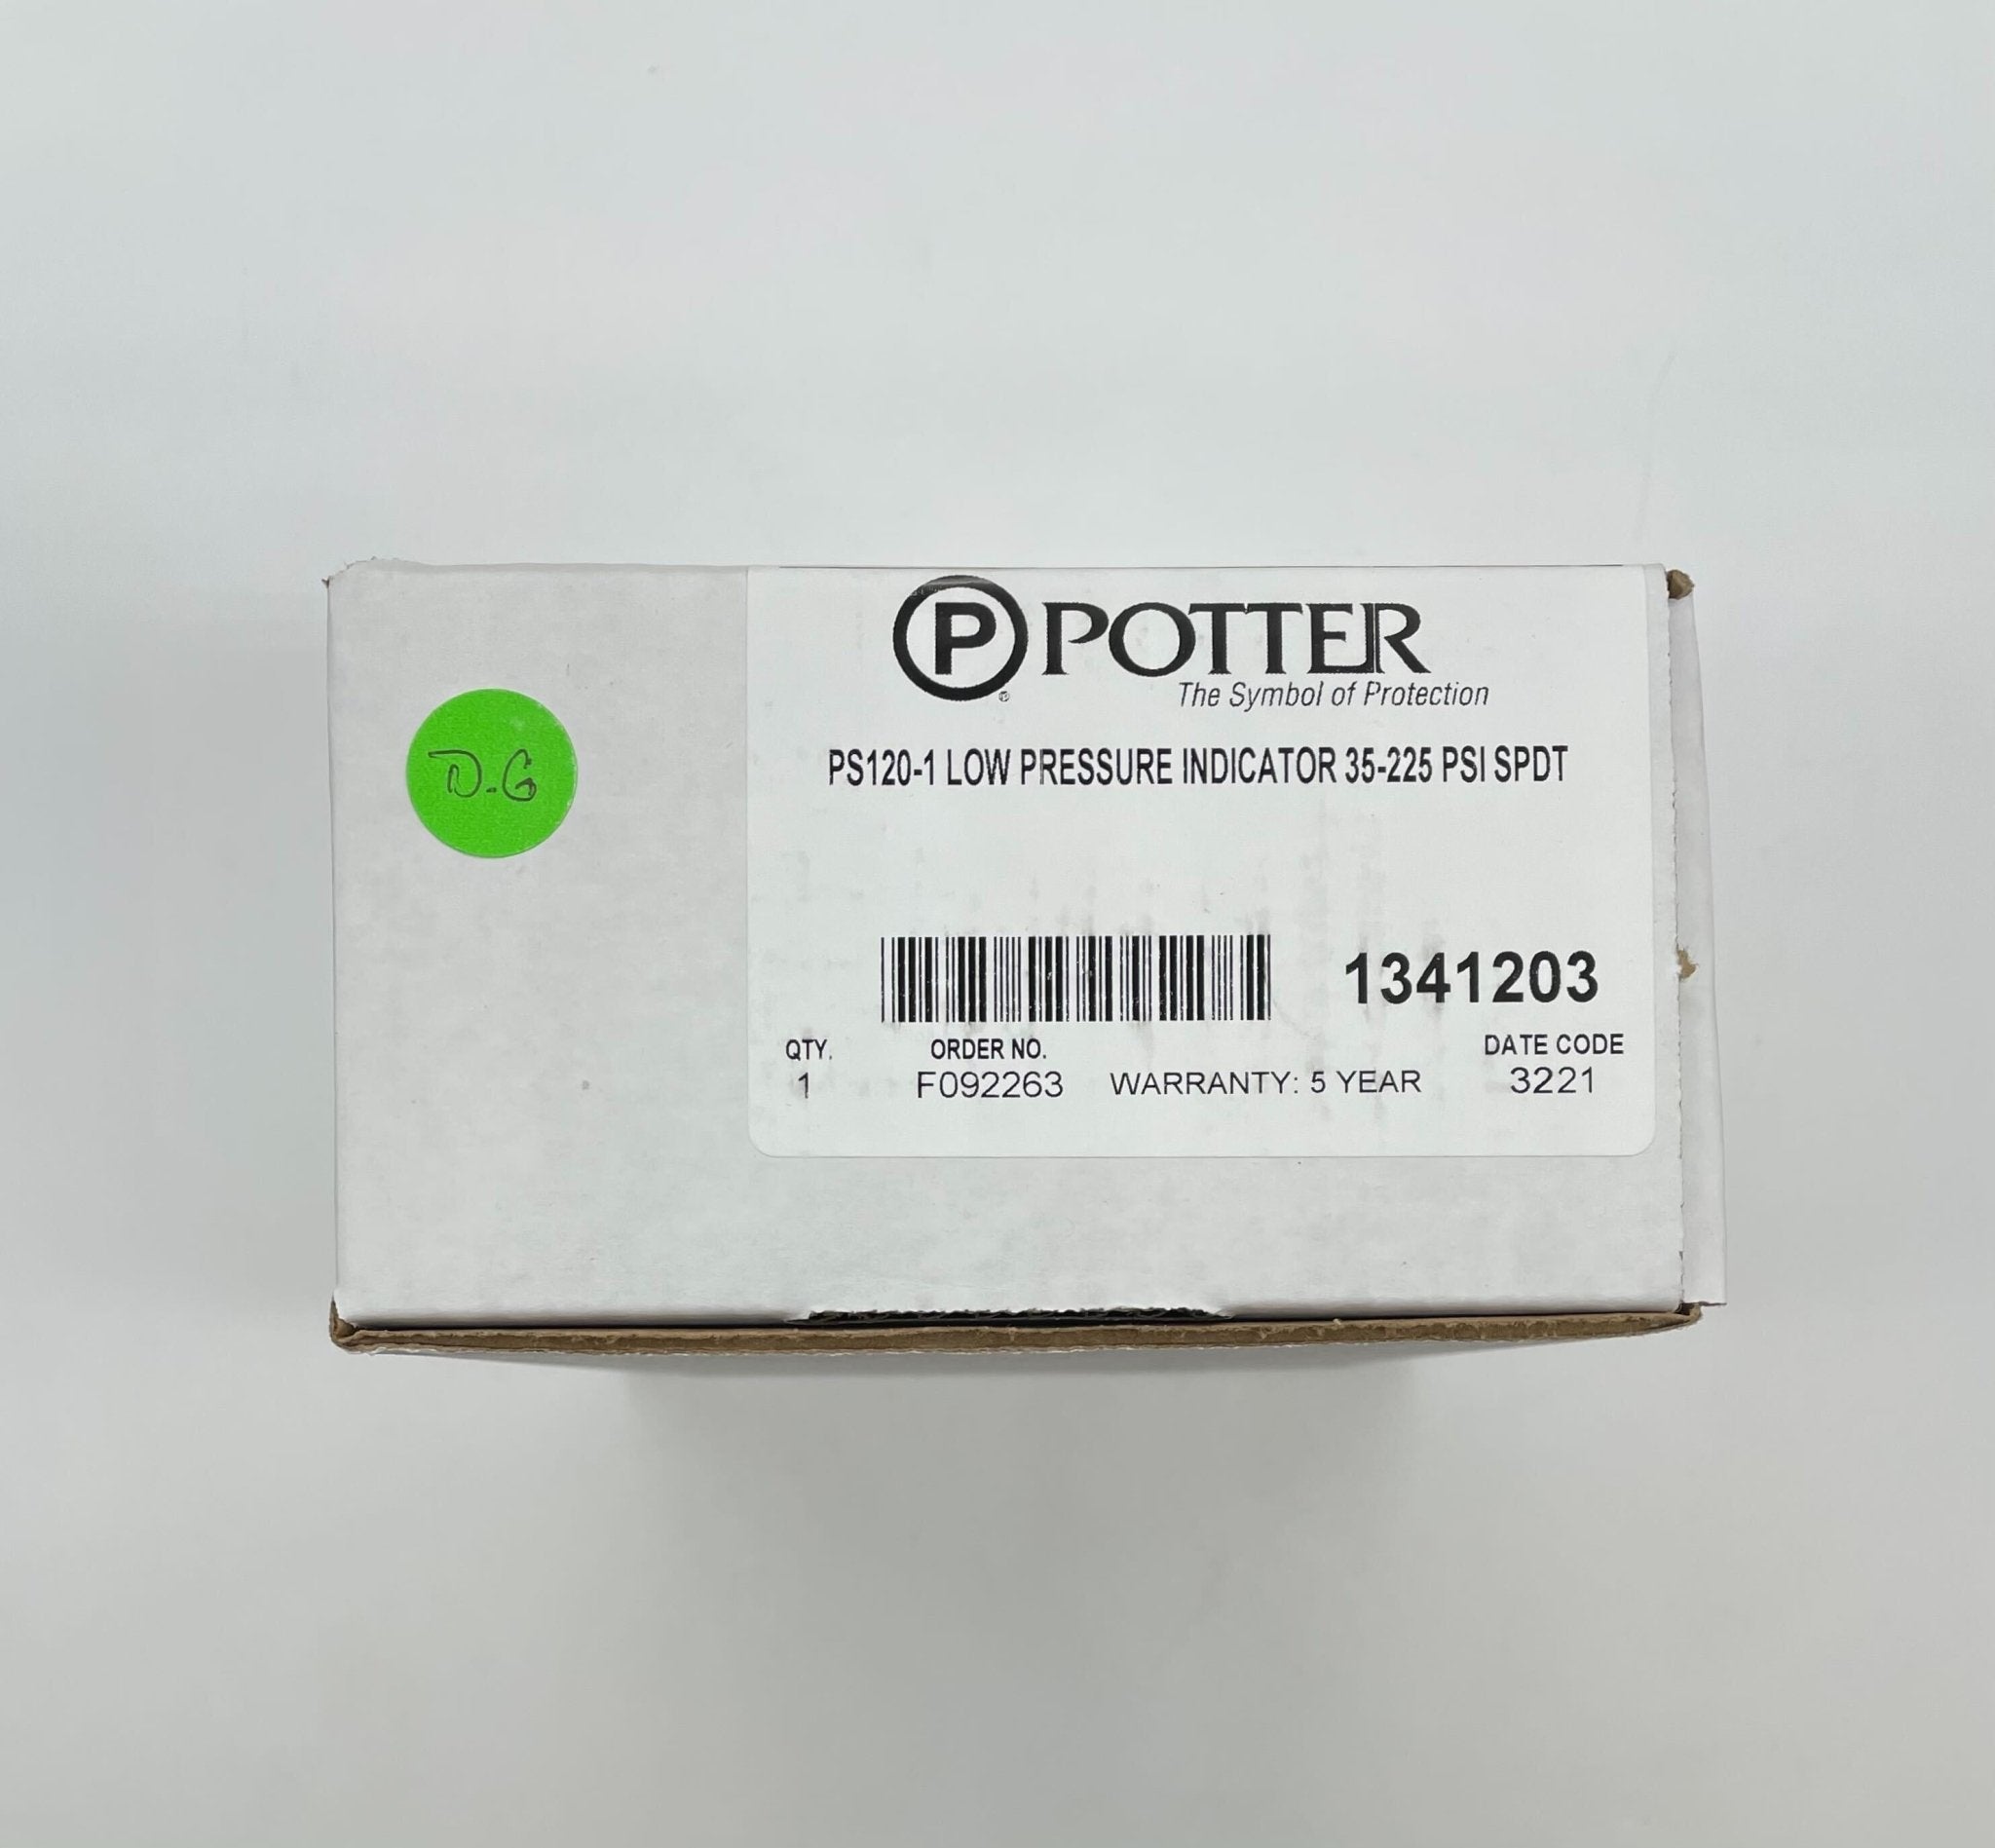 Potter PS120-1 Low Press. 60-175 PSI, SPDT - The Fire Alarm Supplier